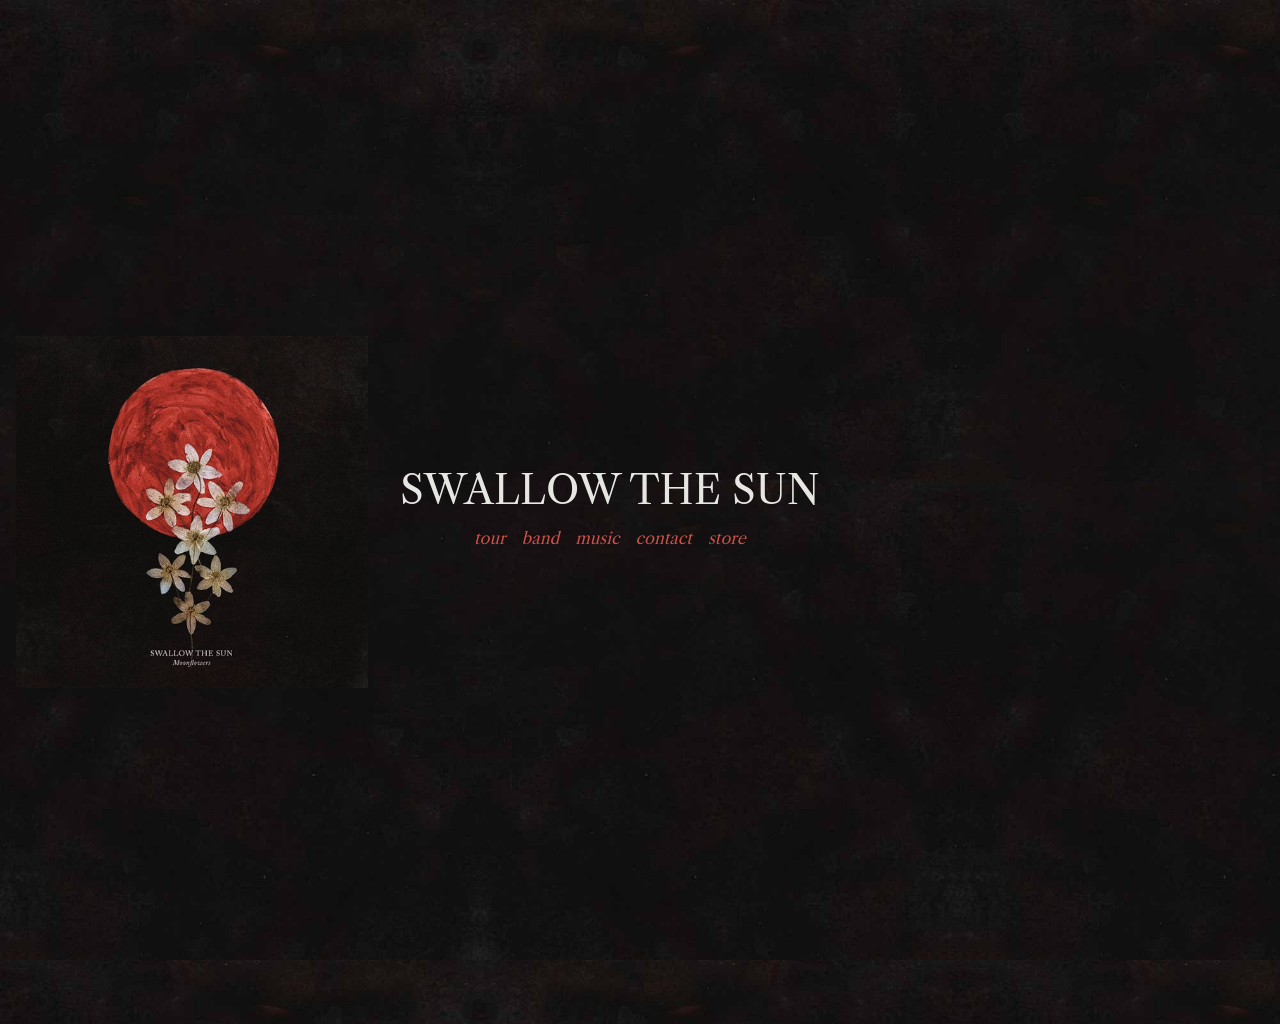 swallowthesun.net